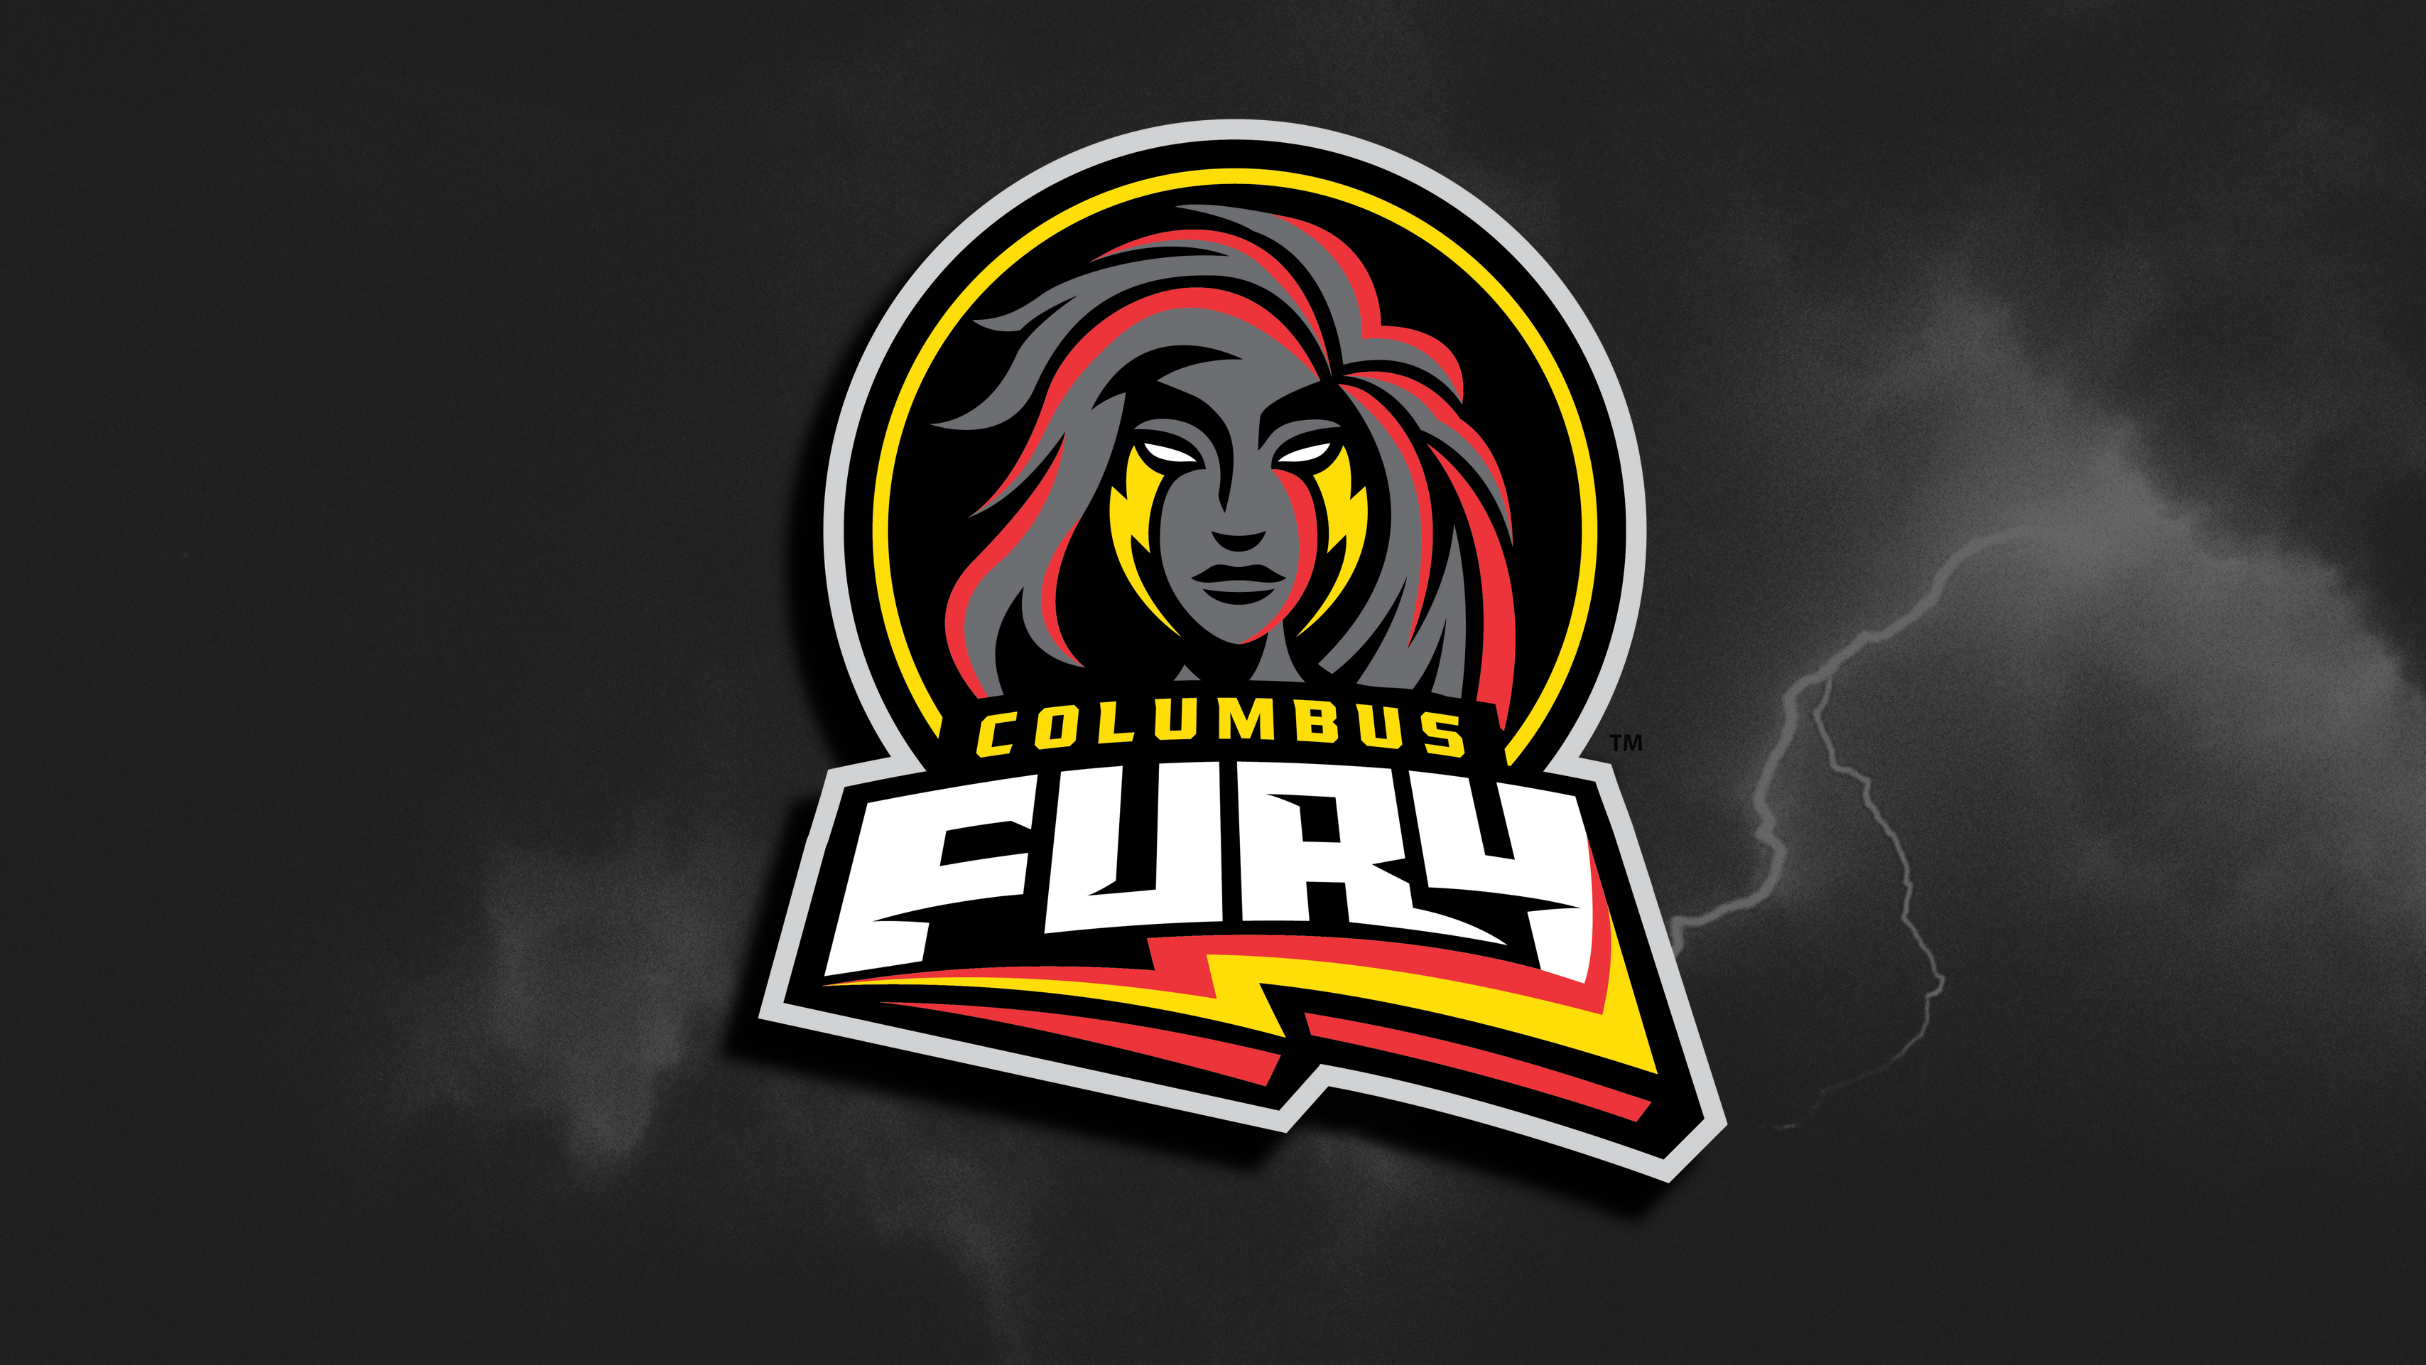 Columbus Fury